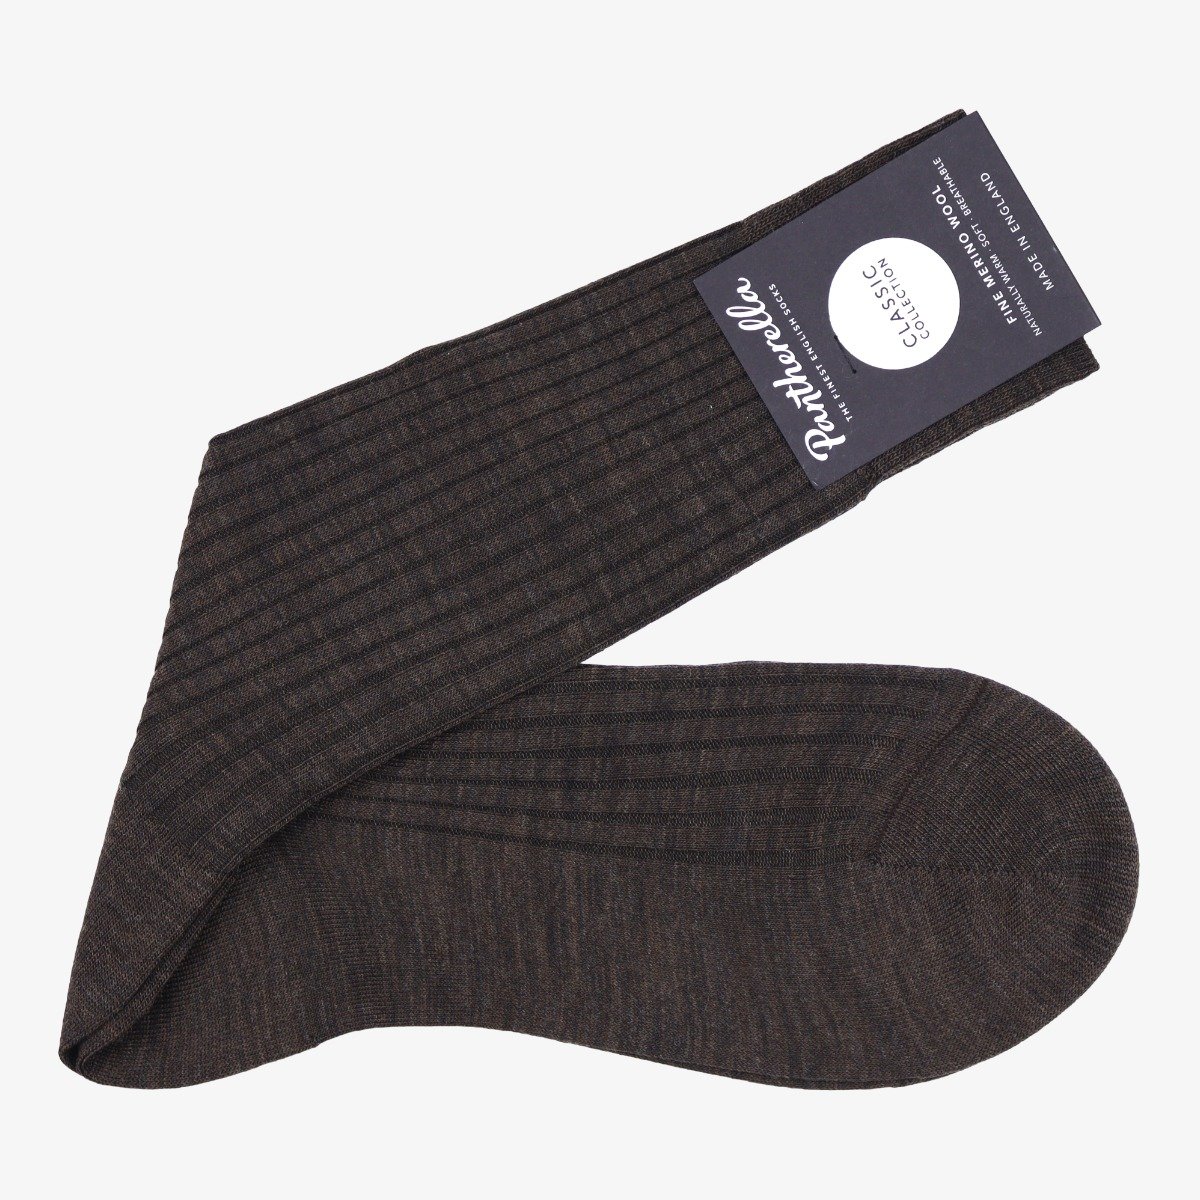 Pantherella Laburnum dark brown ribbed merino wool men's socks